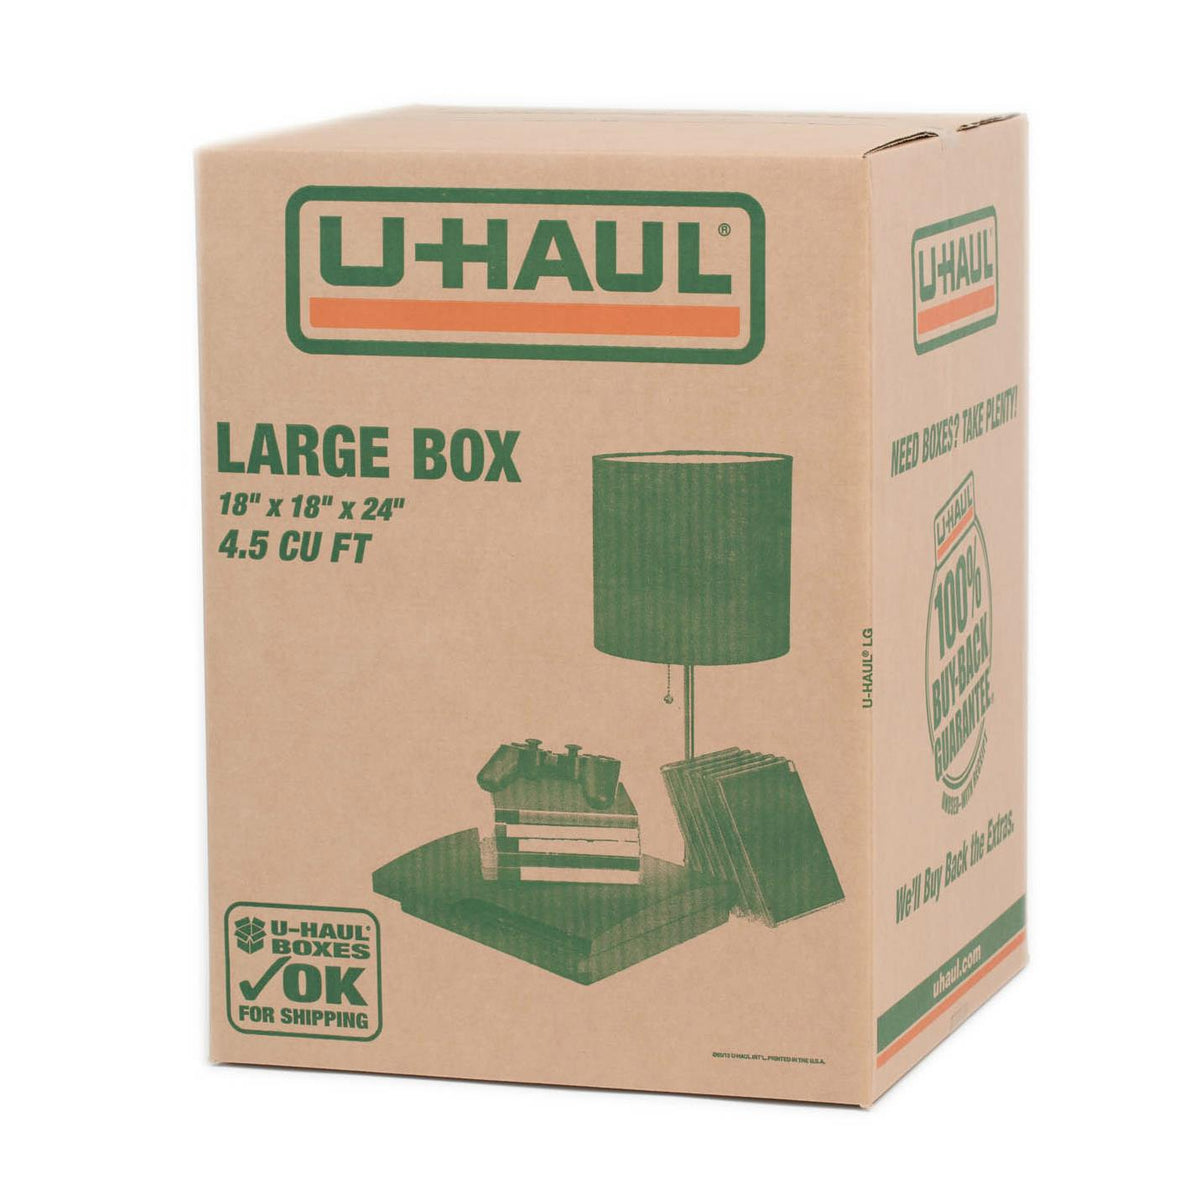 Large Box (4.5 Cube)